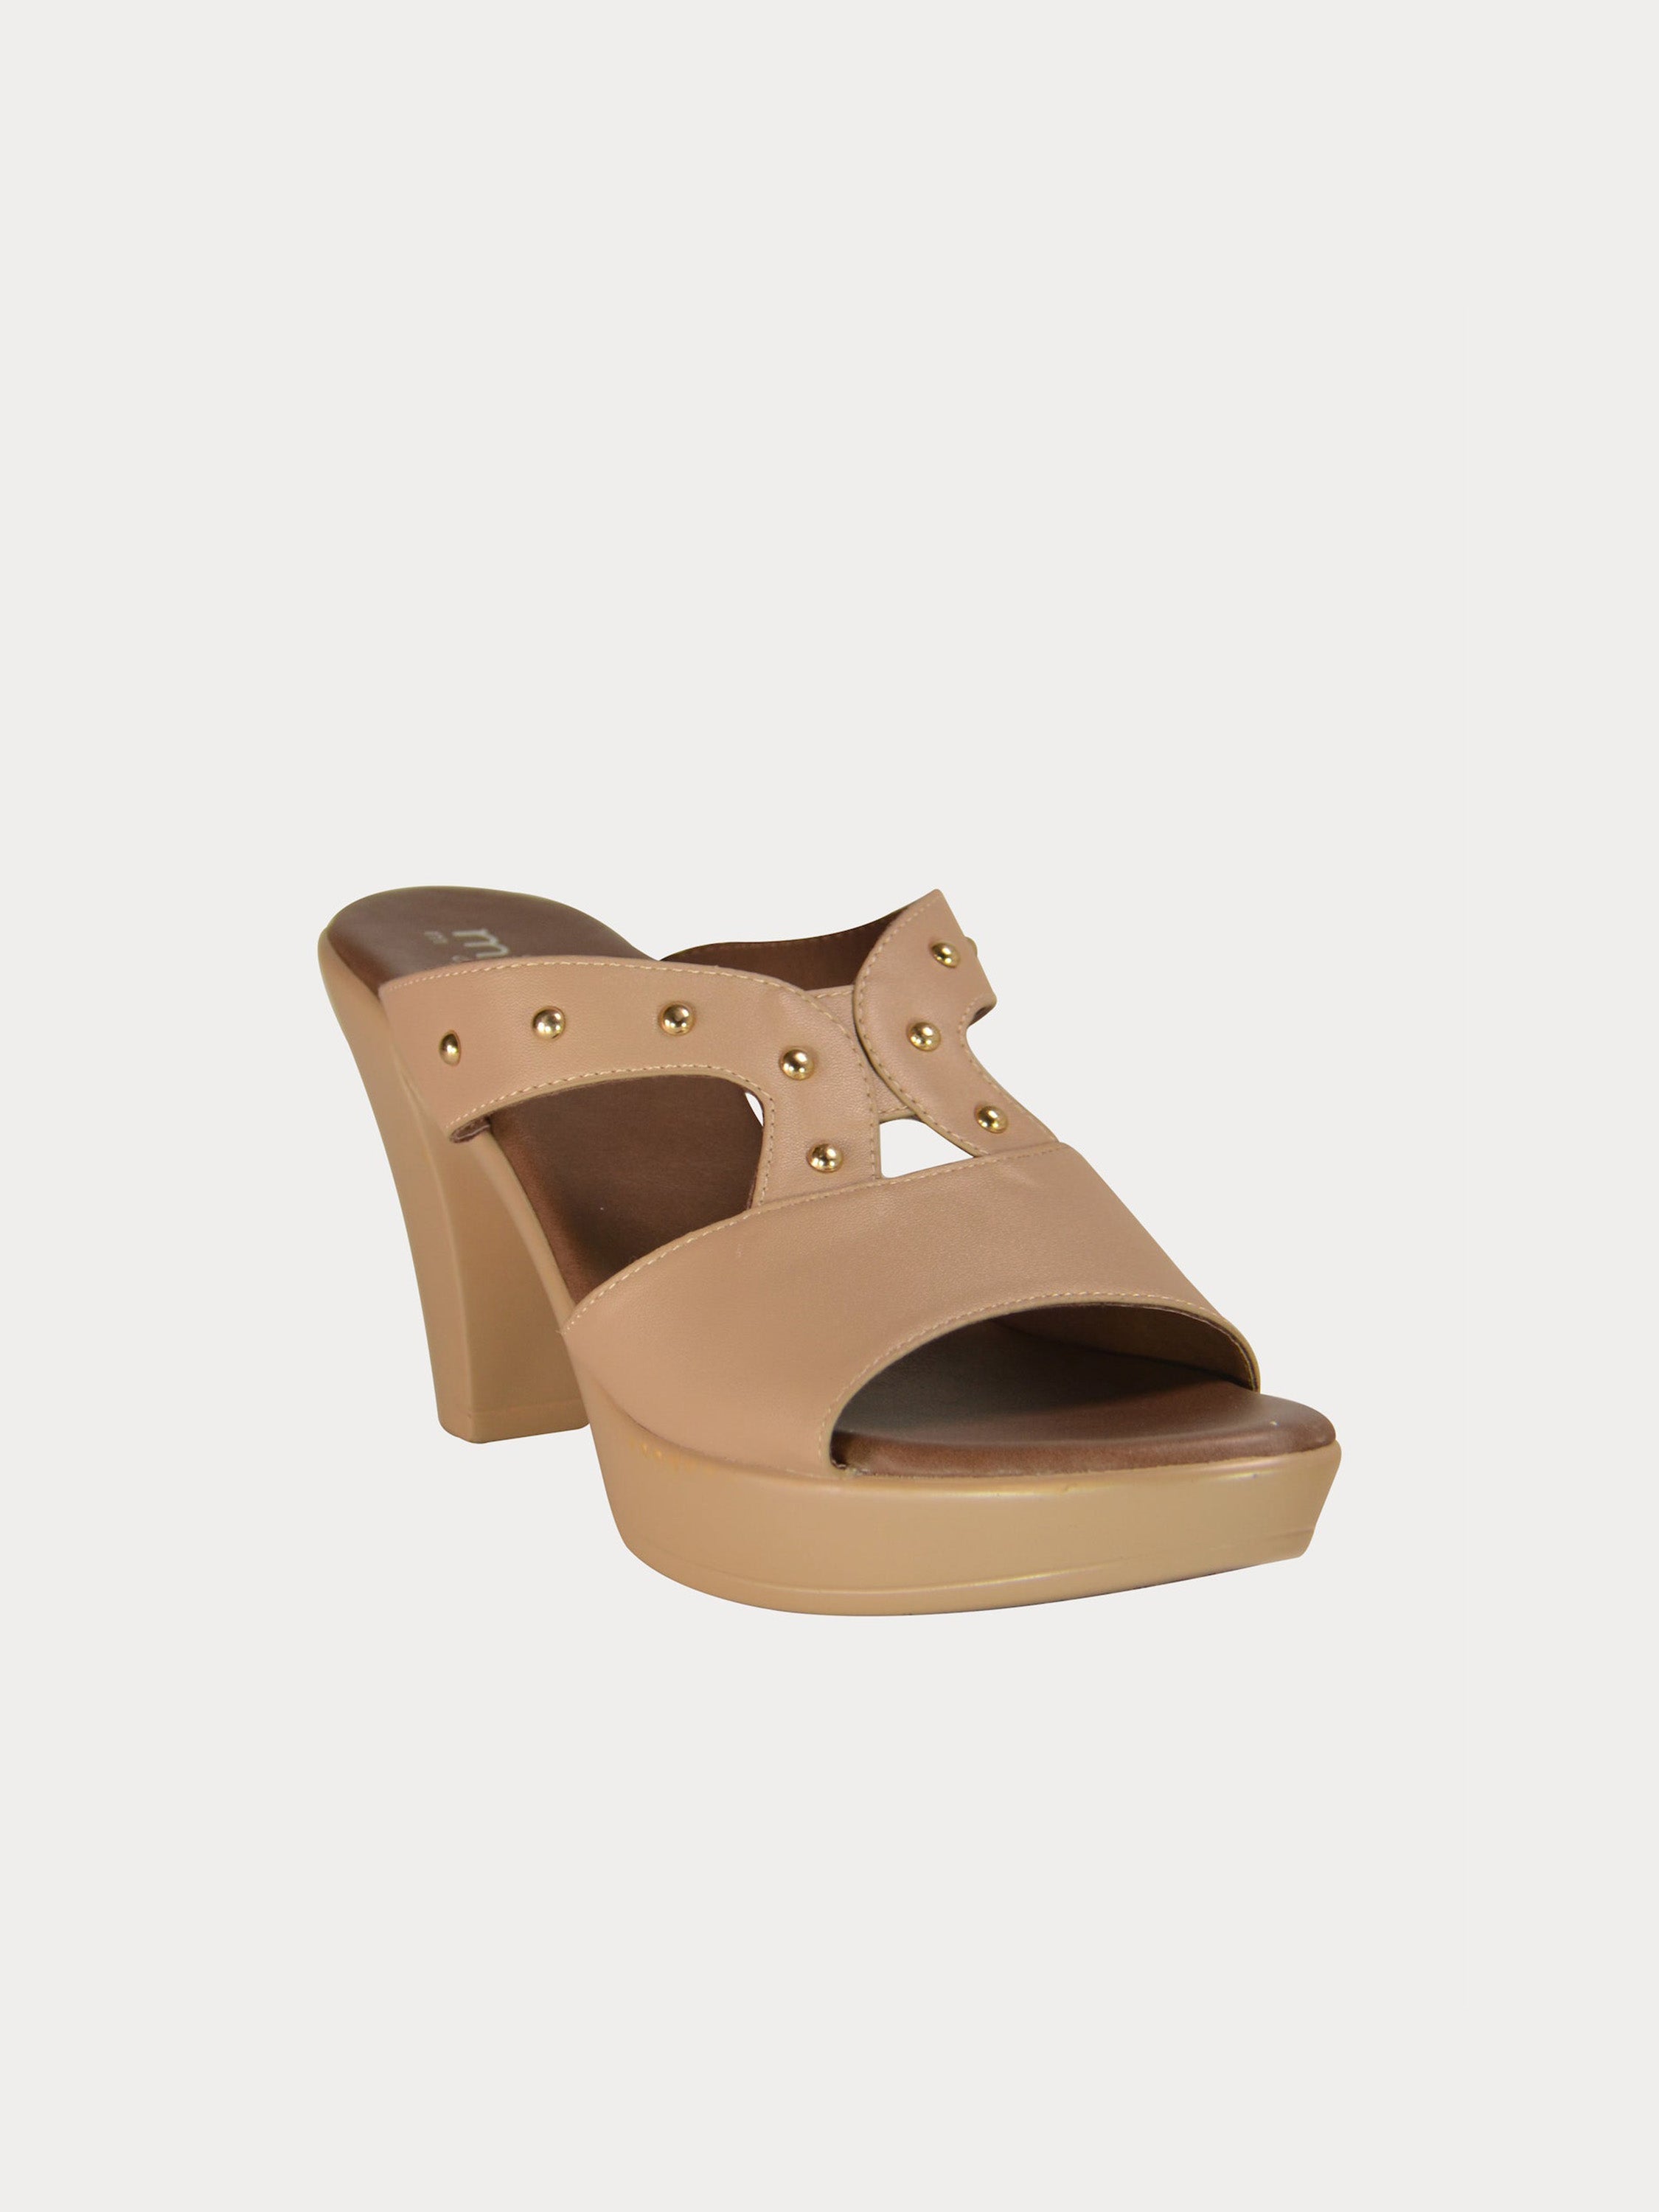 Michelle Morgan 914RJ40F Women's Heeled Sandals #color_Beige